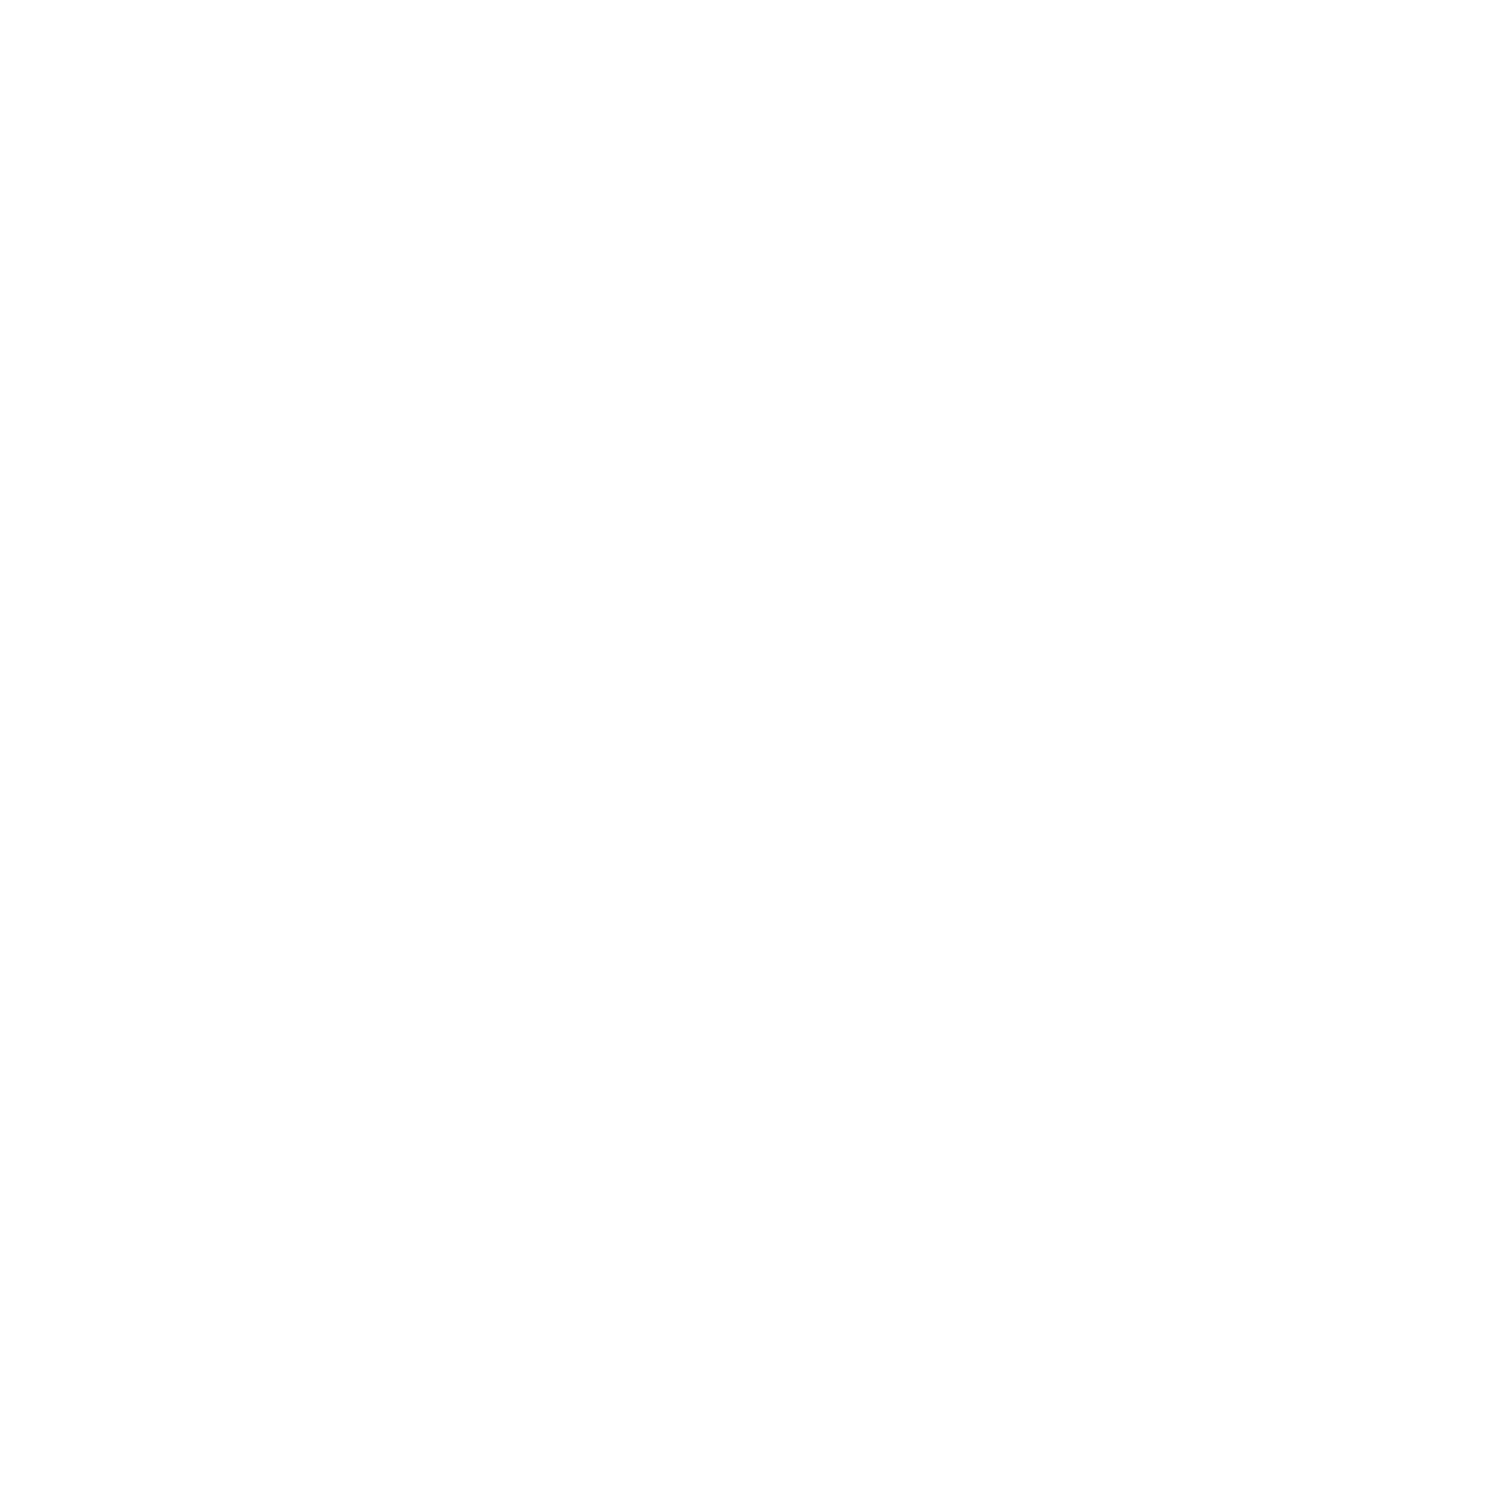 EG Strategies